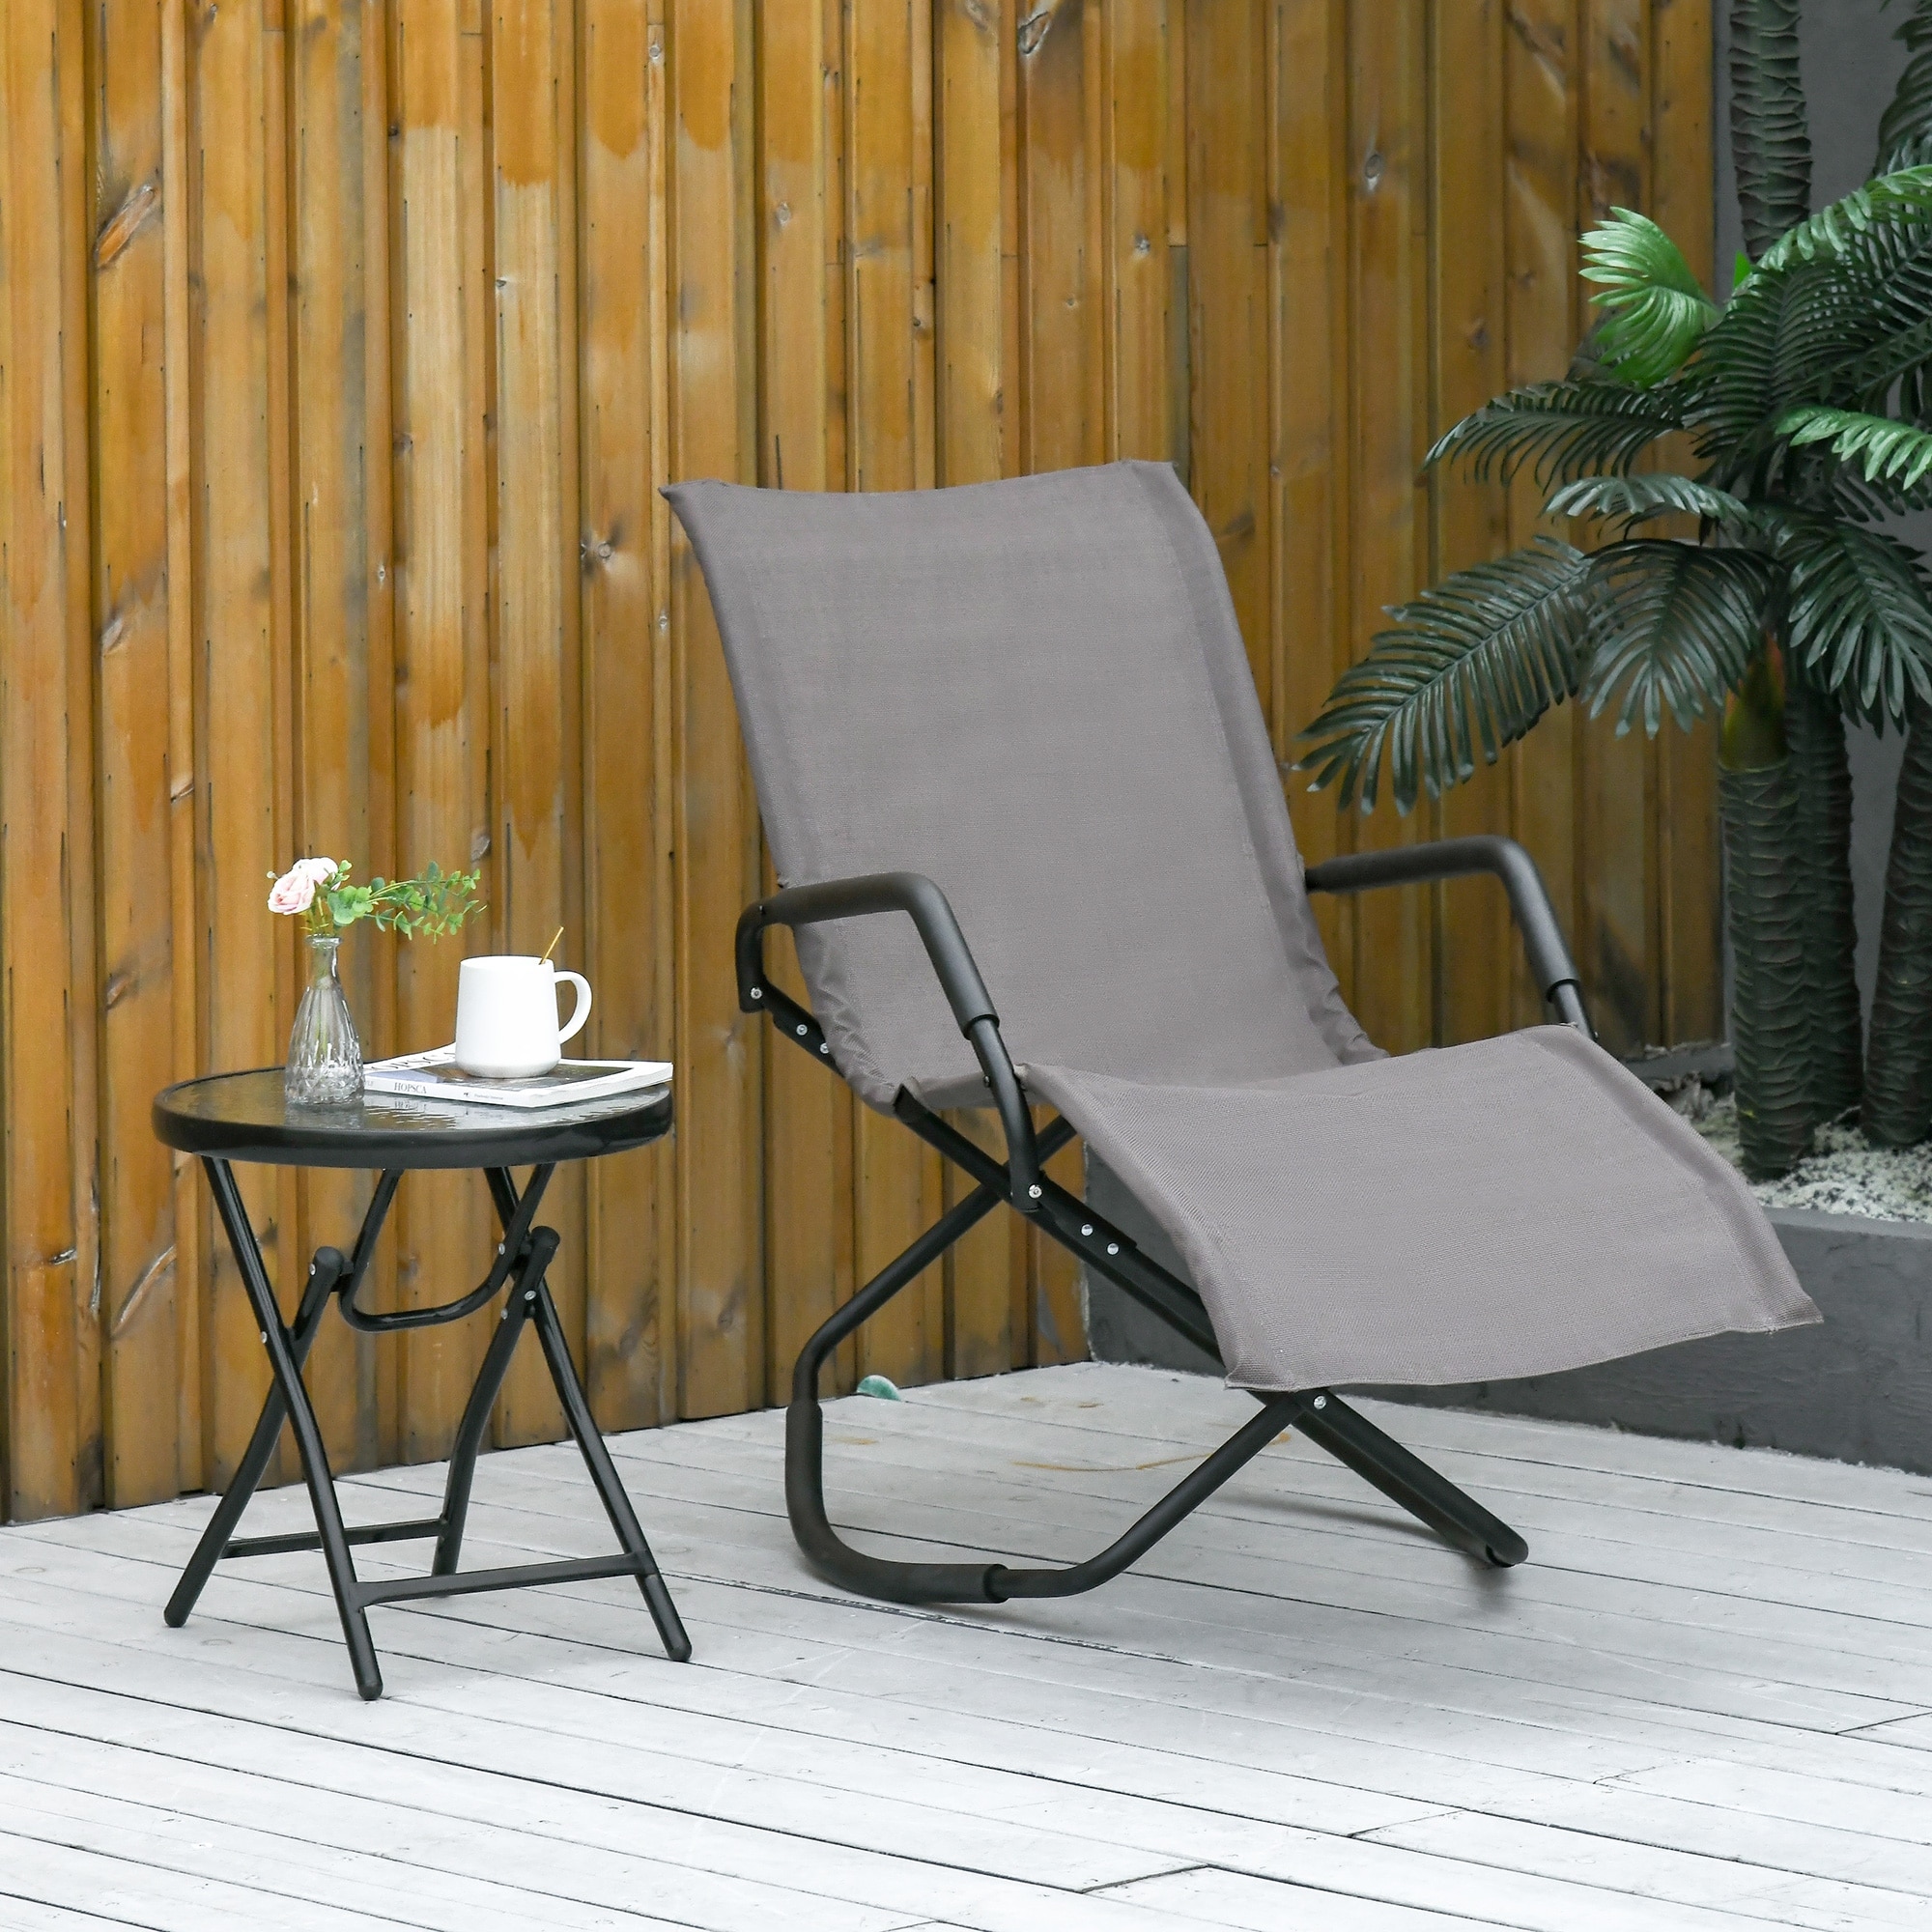 Outsunny Garden Rocking Sun Lounger Outdoor Zero-gravity Folding Reclining Rocker Lounge Chair For Sunbathing